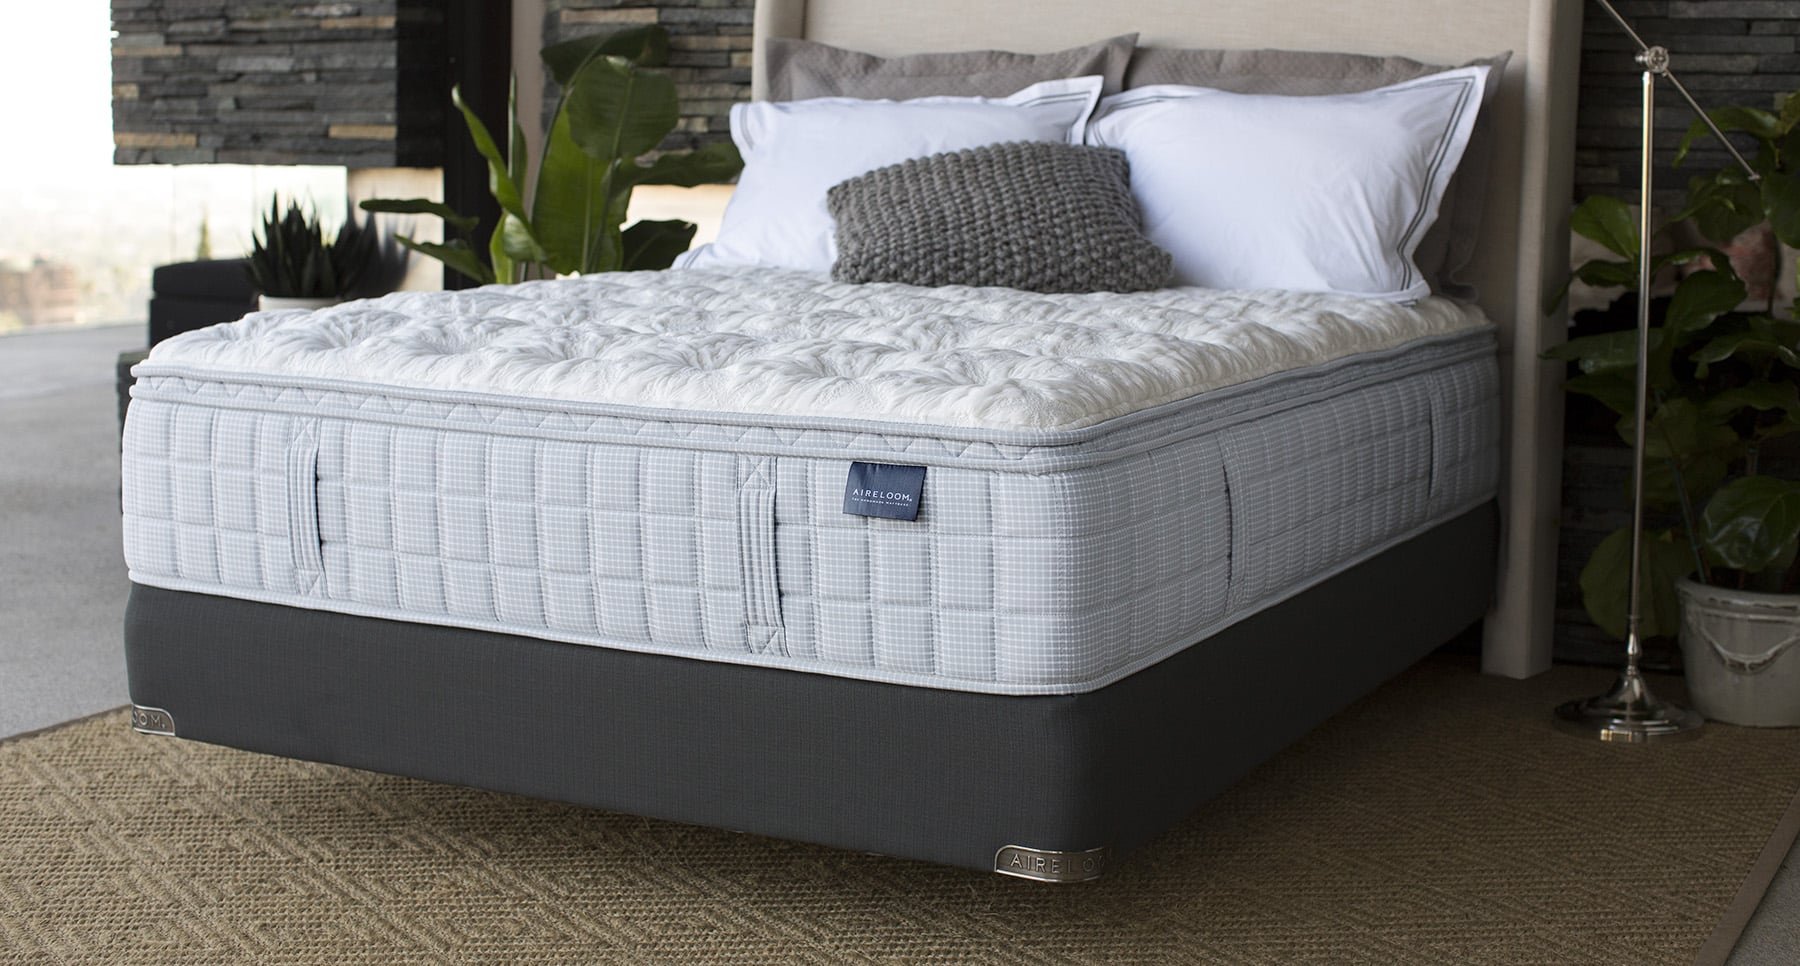 aireloom latex luxury plush mattress